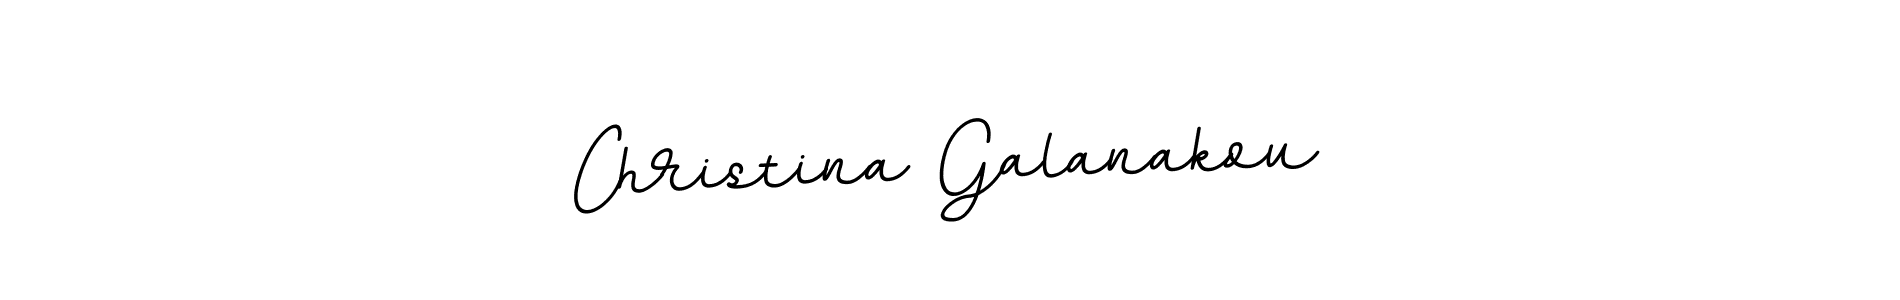 How to Draw Christina Galanakou signature style? BallpointsItalic-DORy9 is a latest design signature styles for name Christina Galanakou. Christina Galanakou signature style 11 images and pictures png